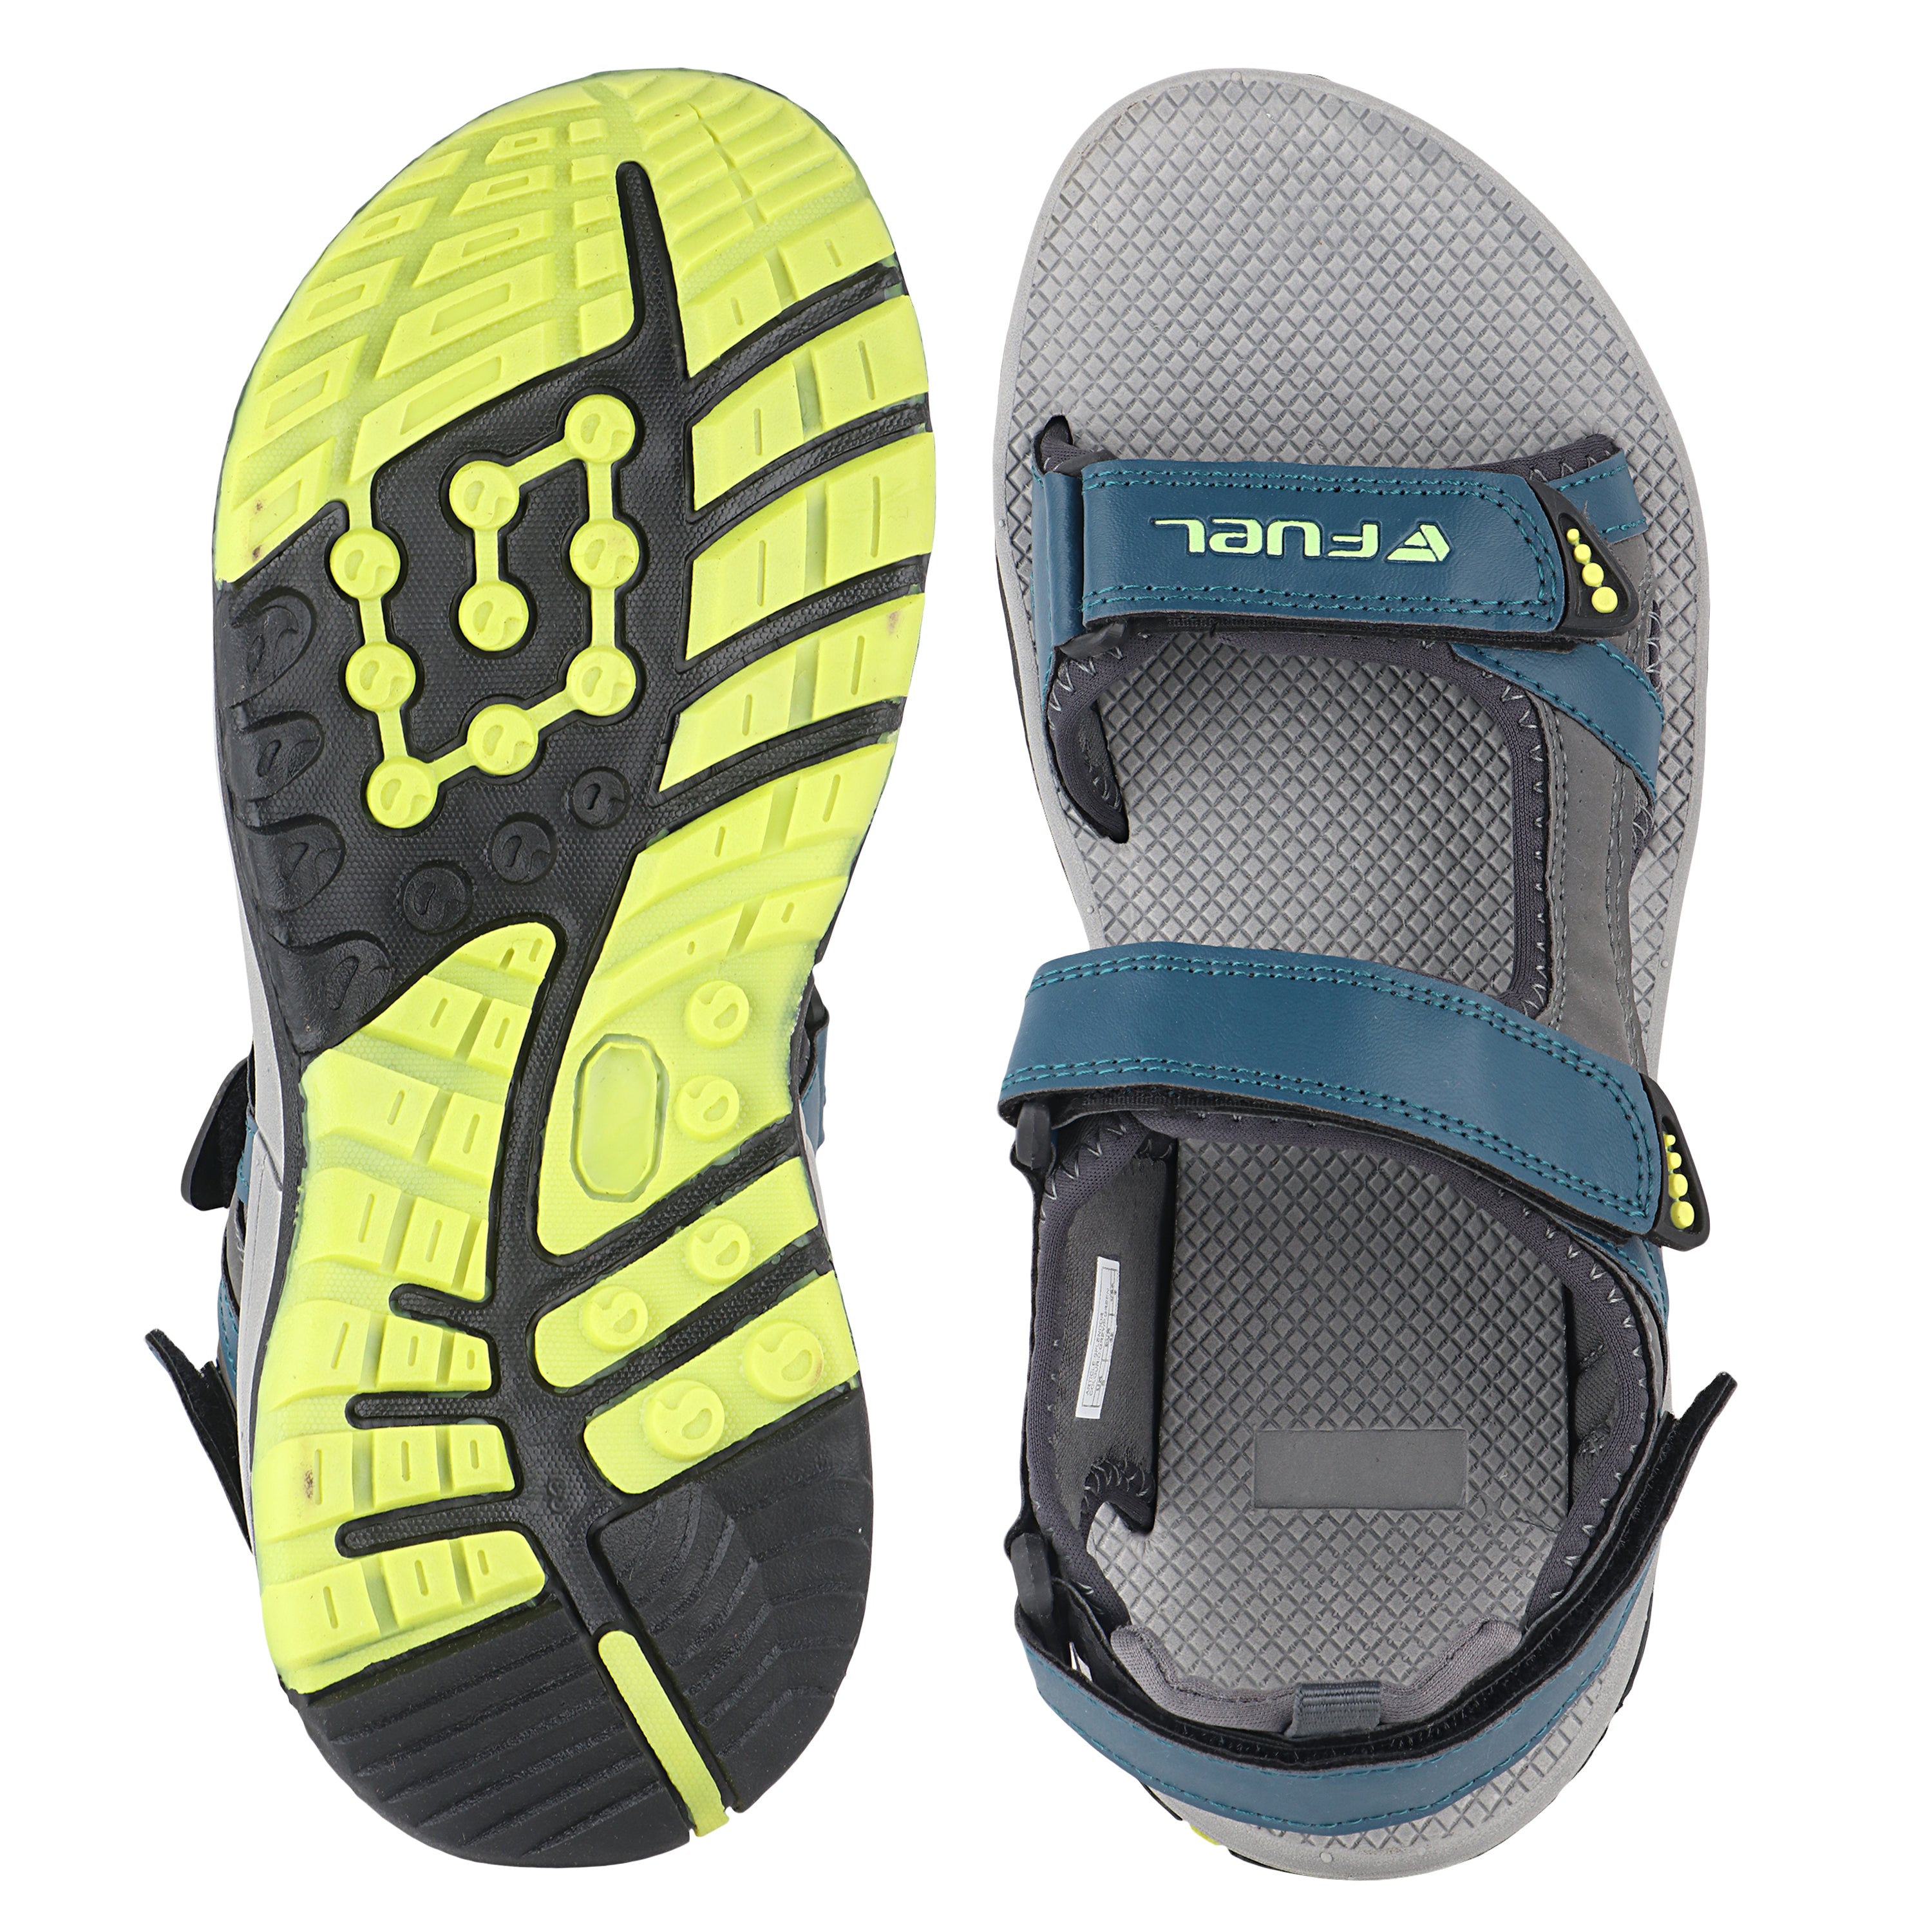 Fuel Splendor Sandals For Men's (Grey-P Green)